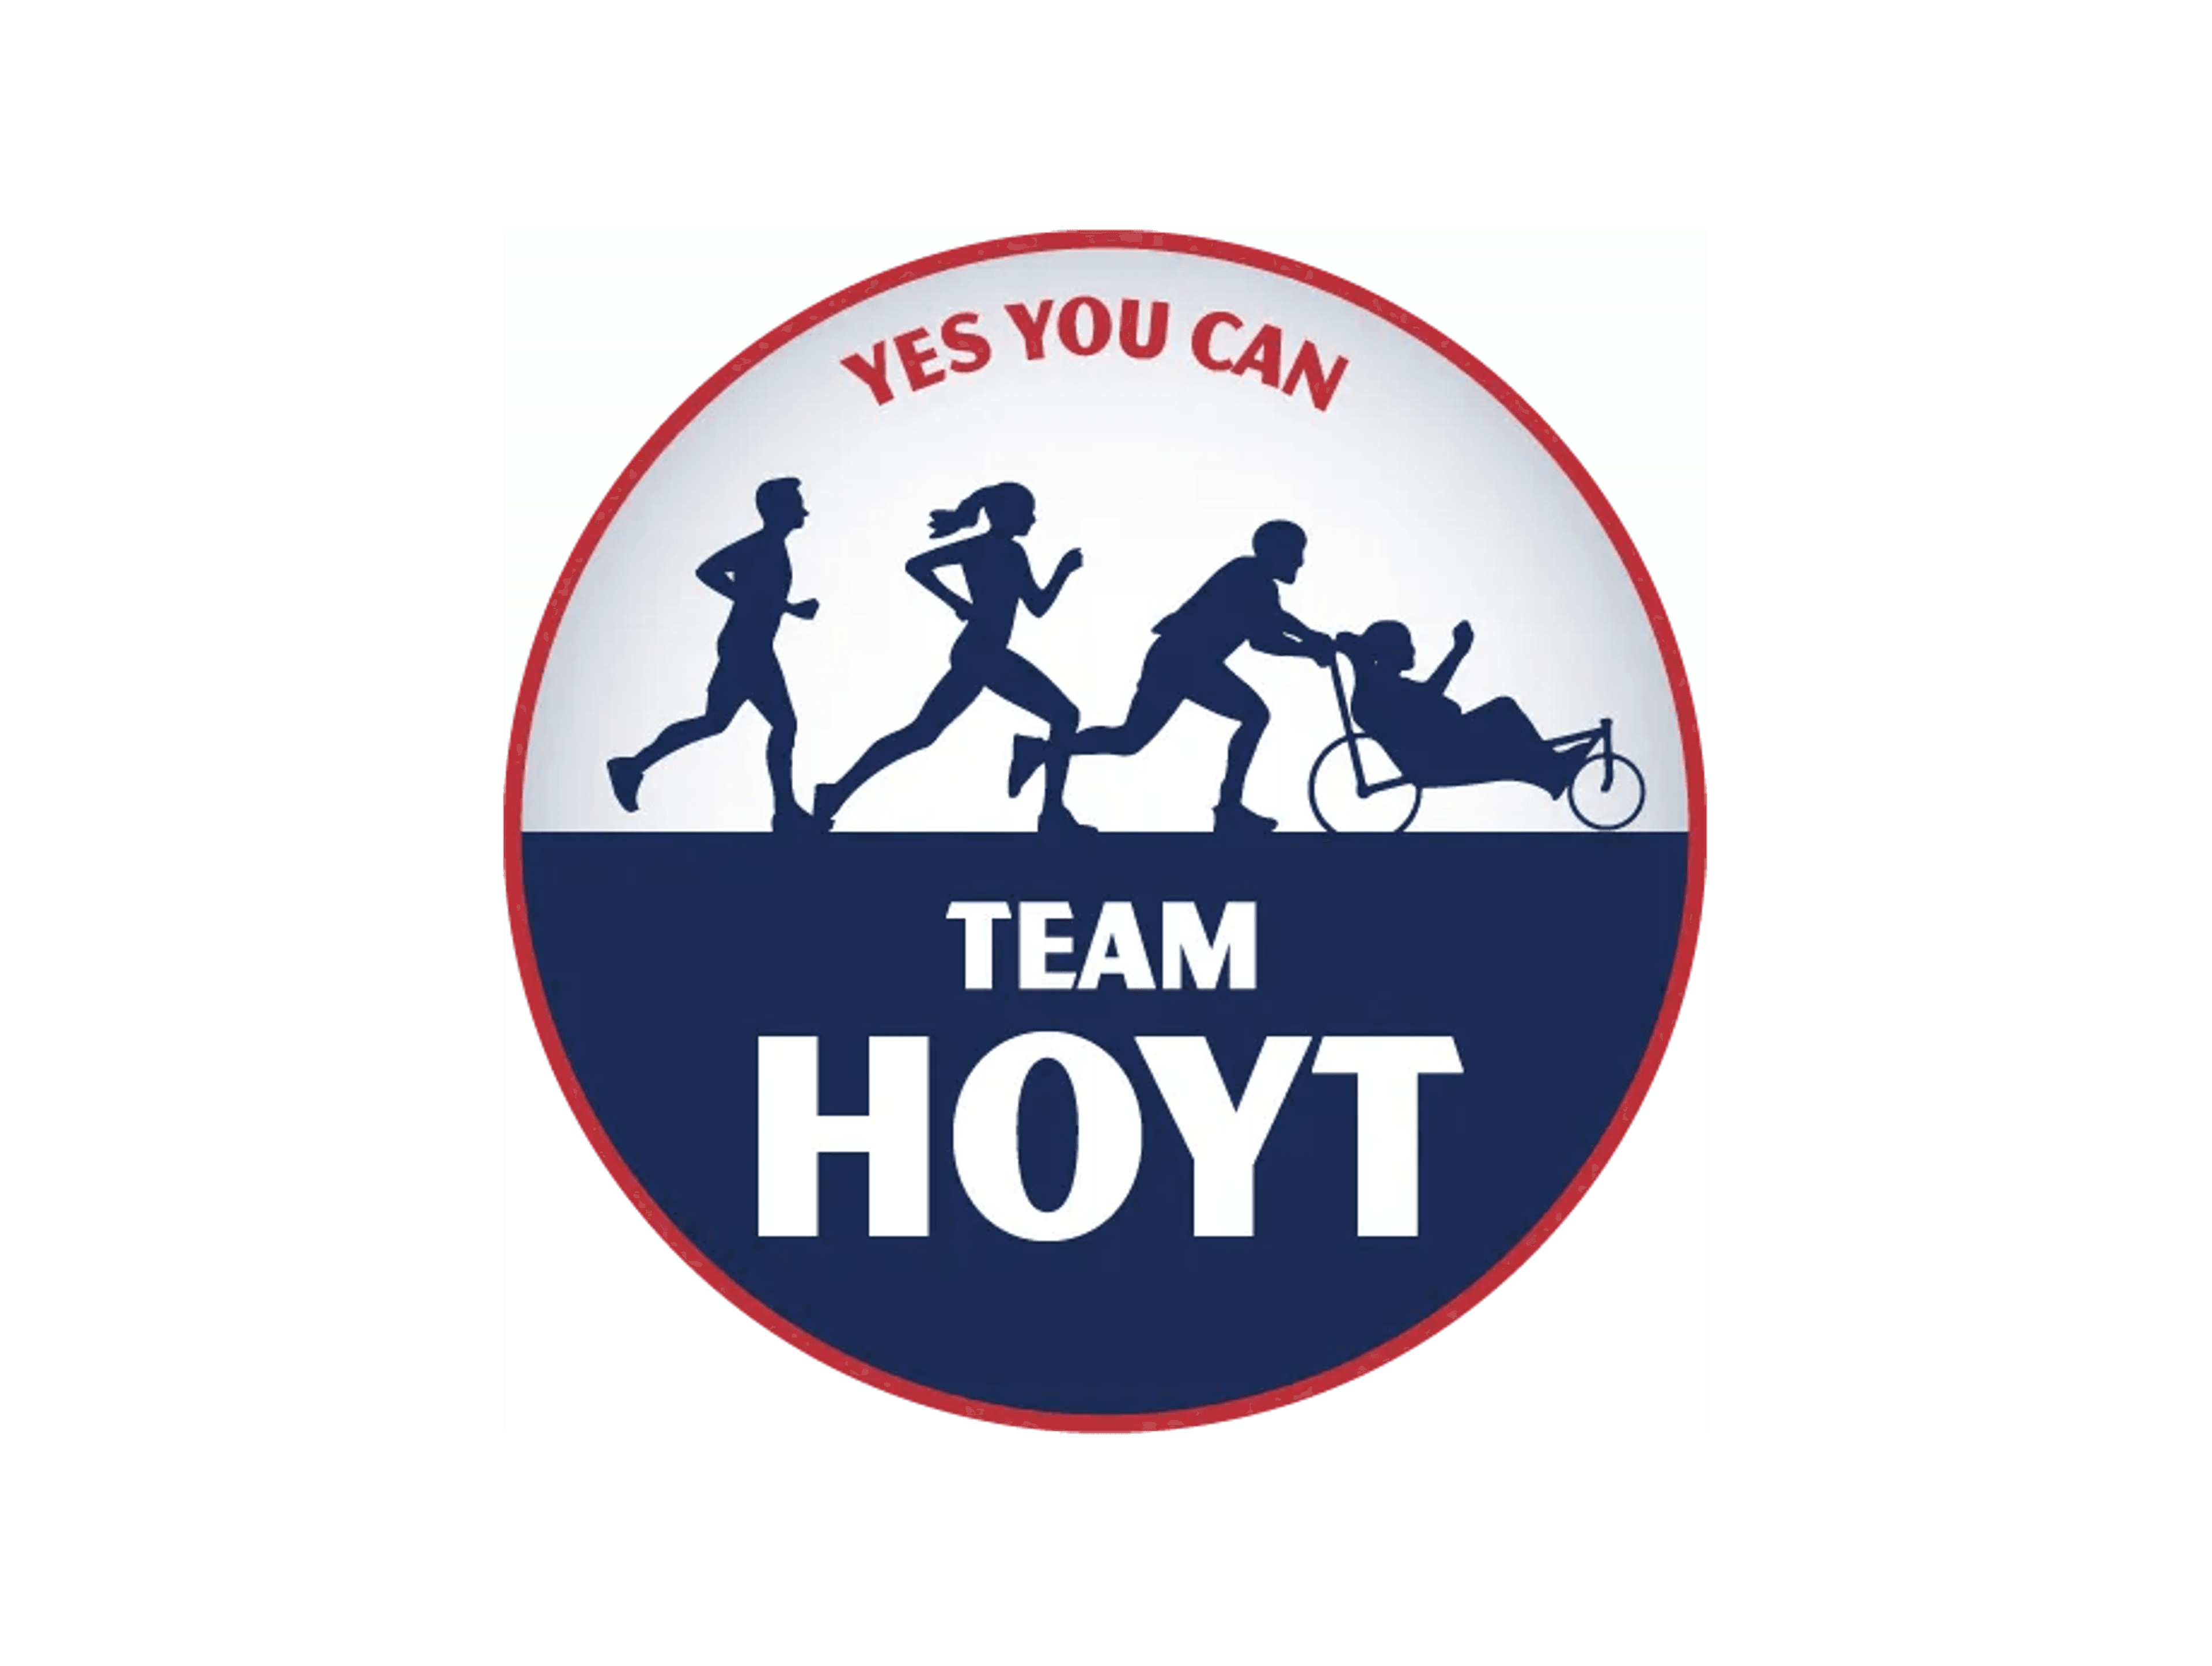 Hoyt Foundation Inc